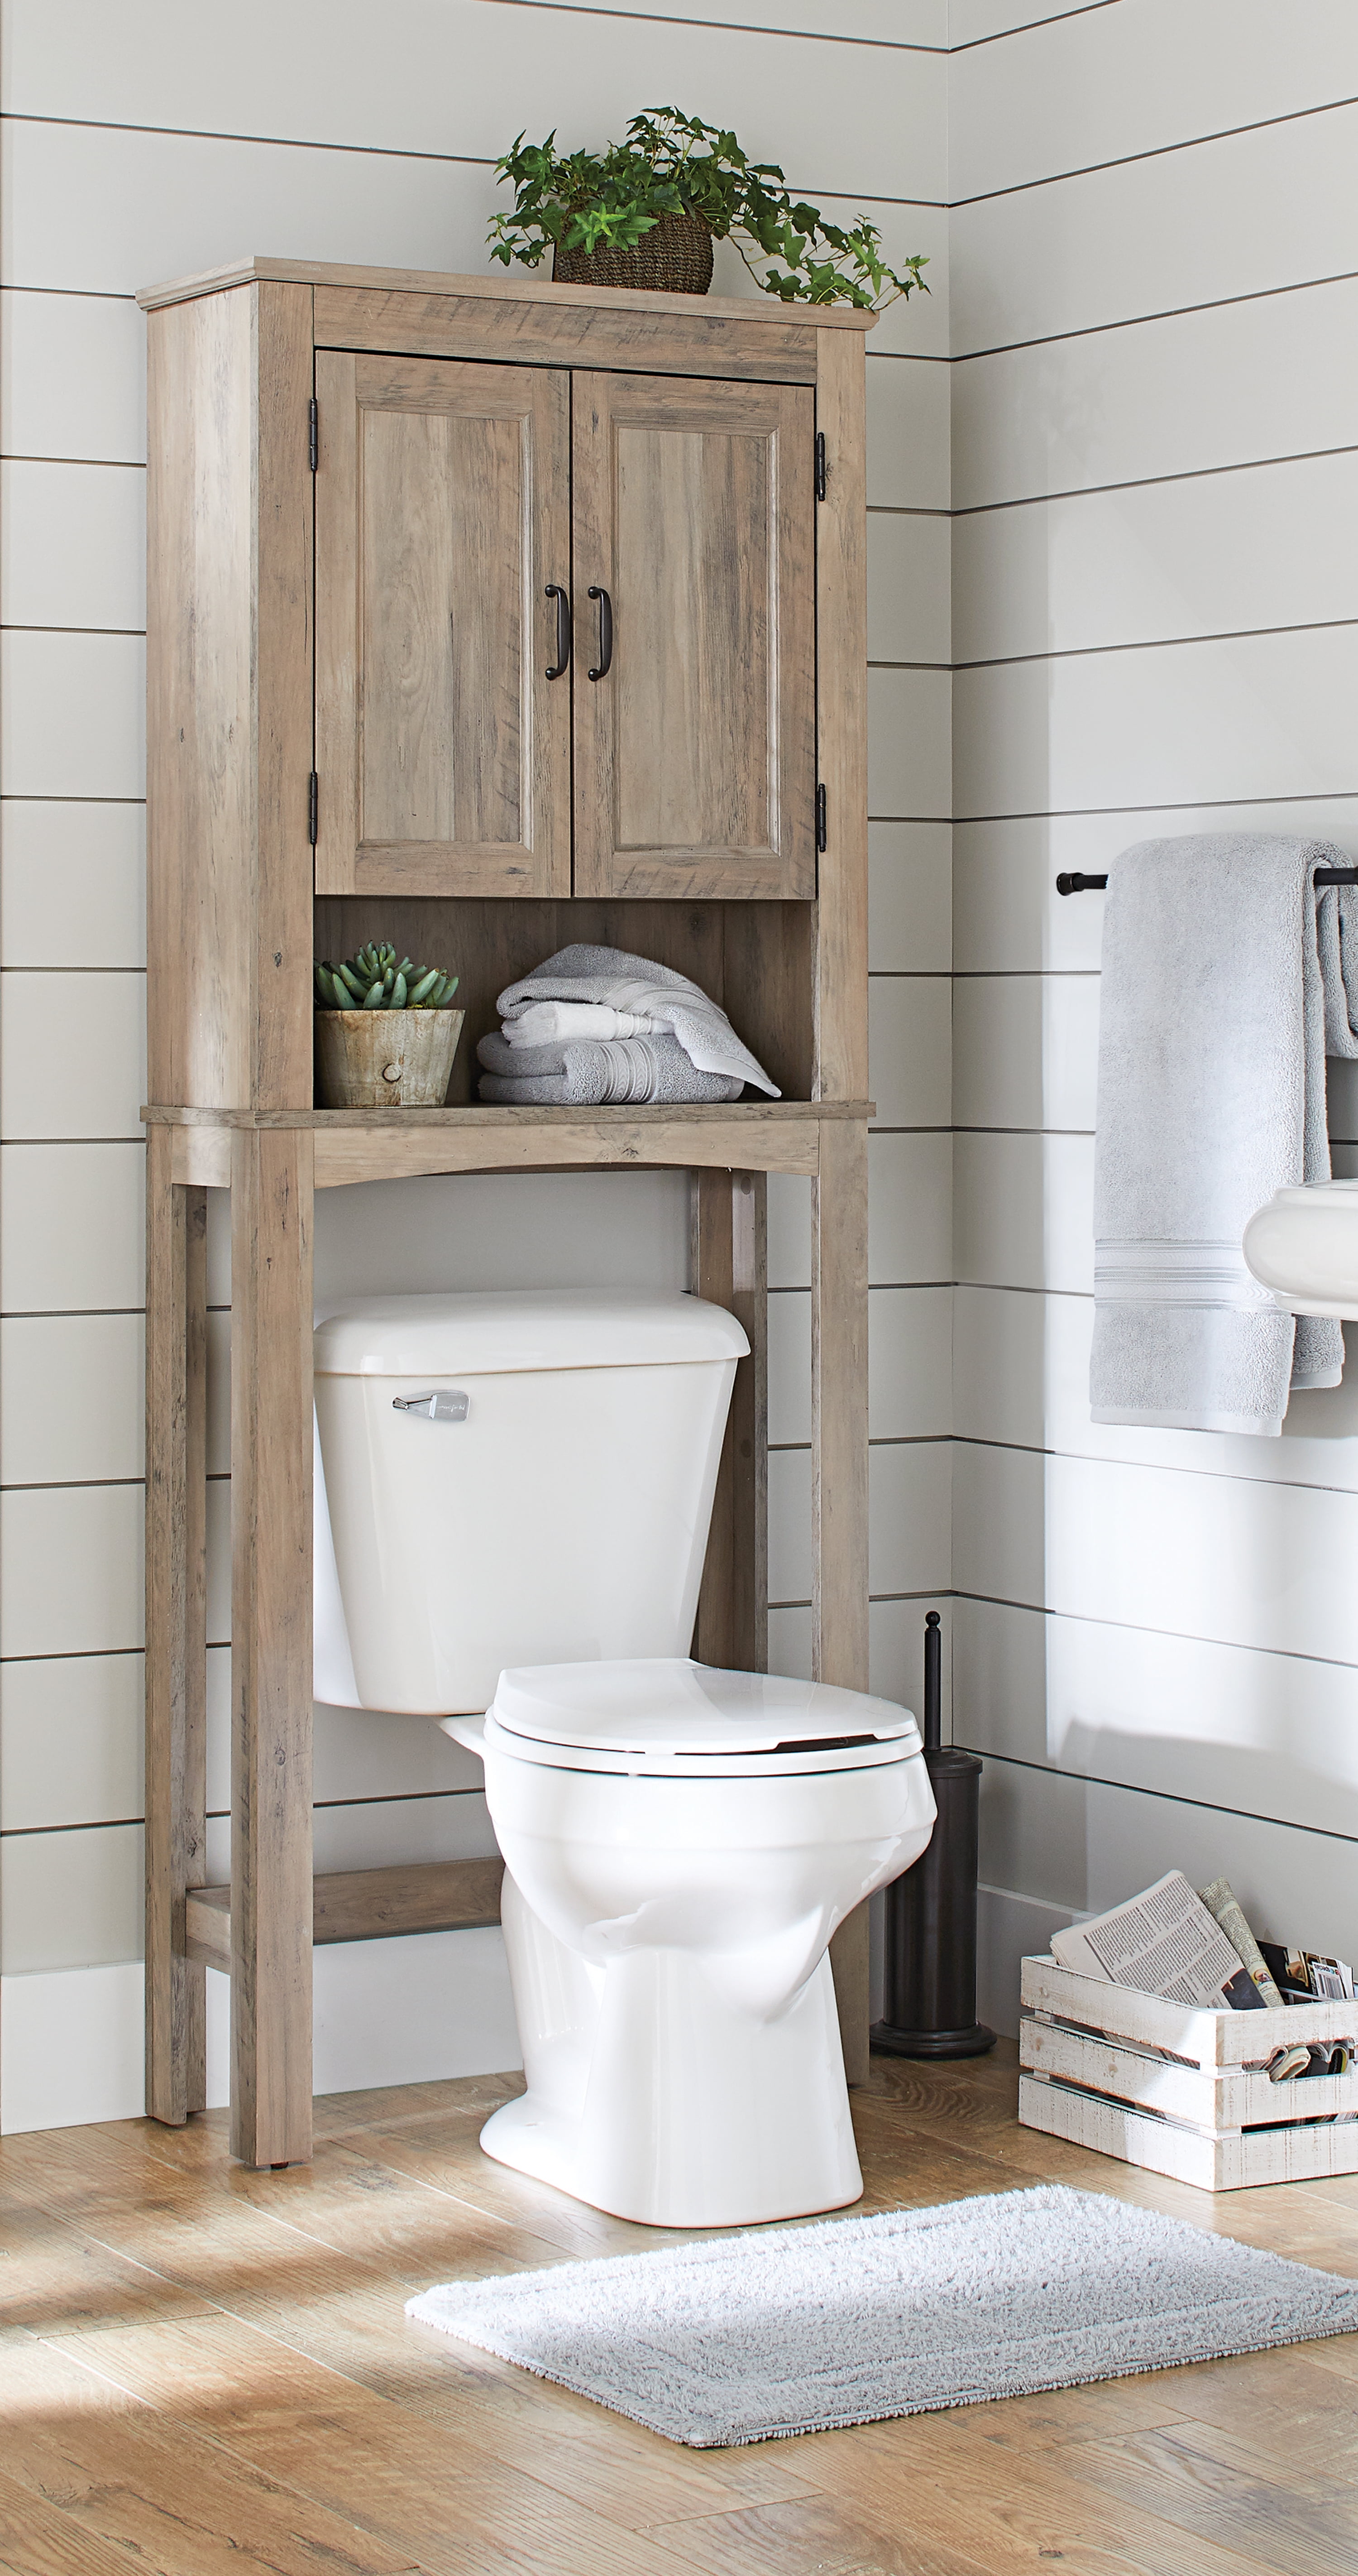 Over the Toilet Bathroom Space Saver Rustic Gray Toilet Shelves Decor Wood eBay